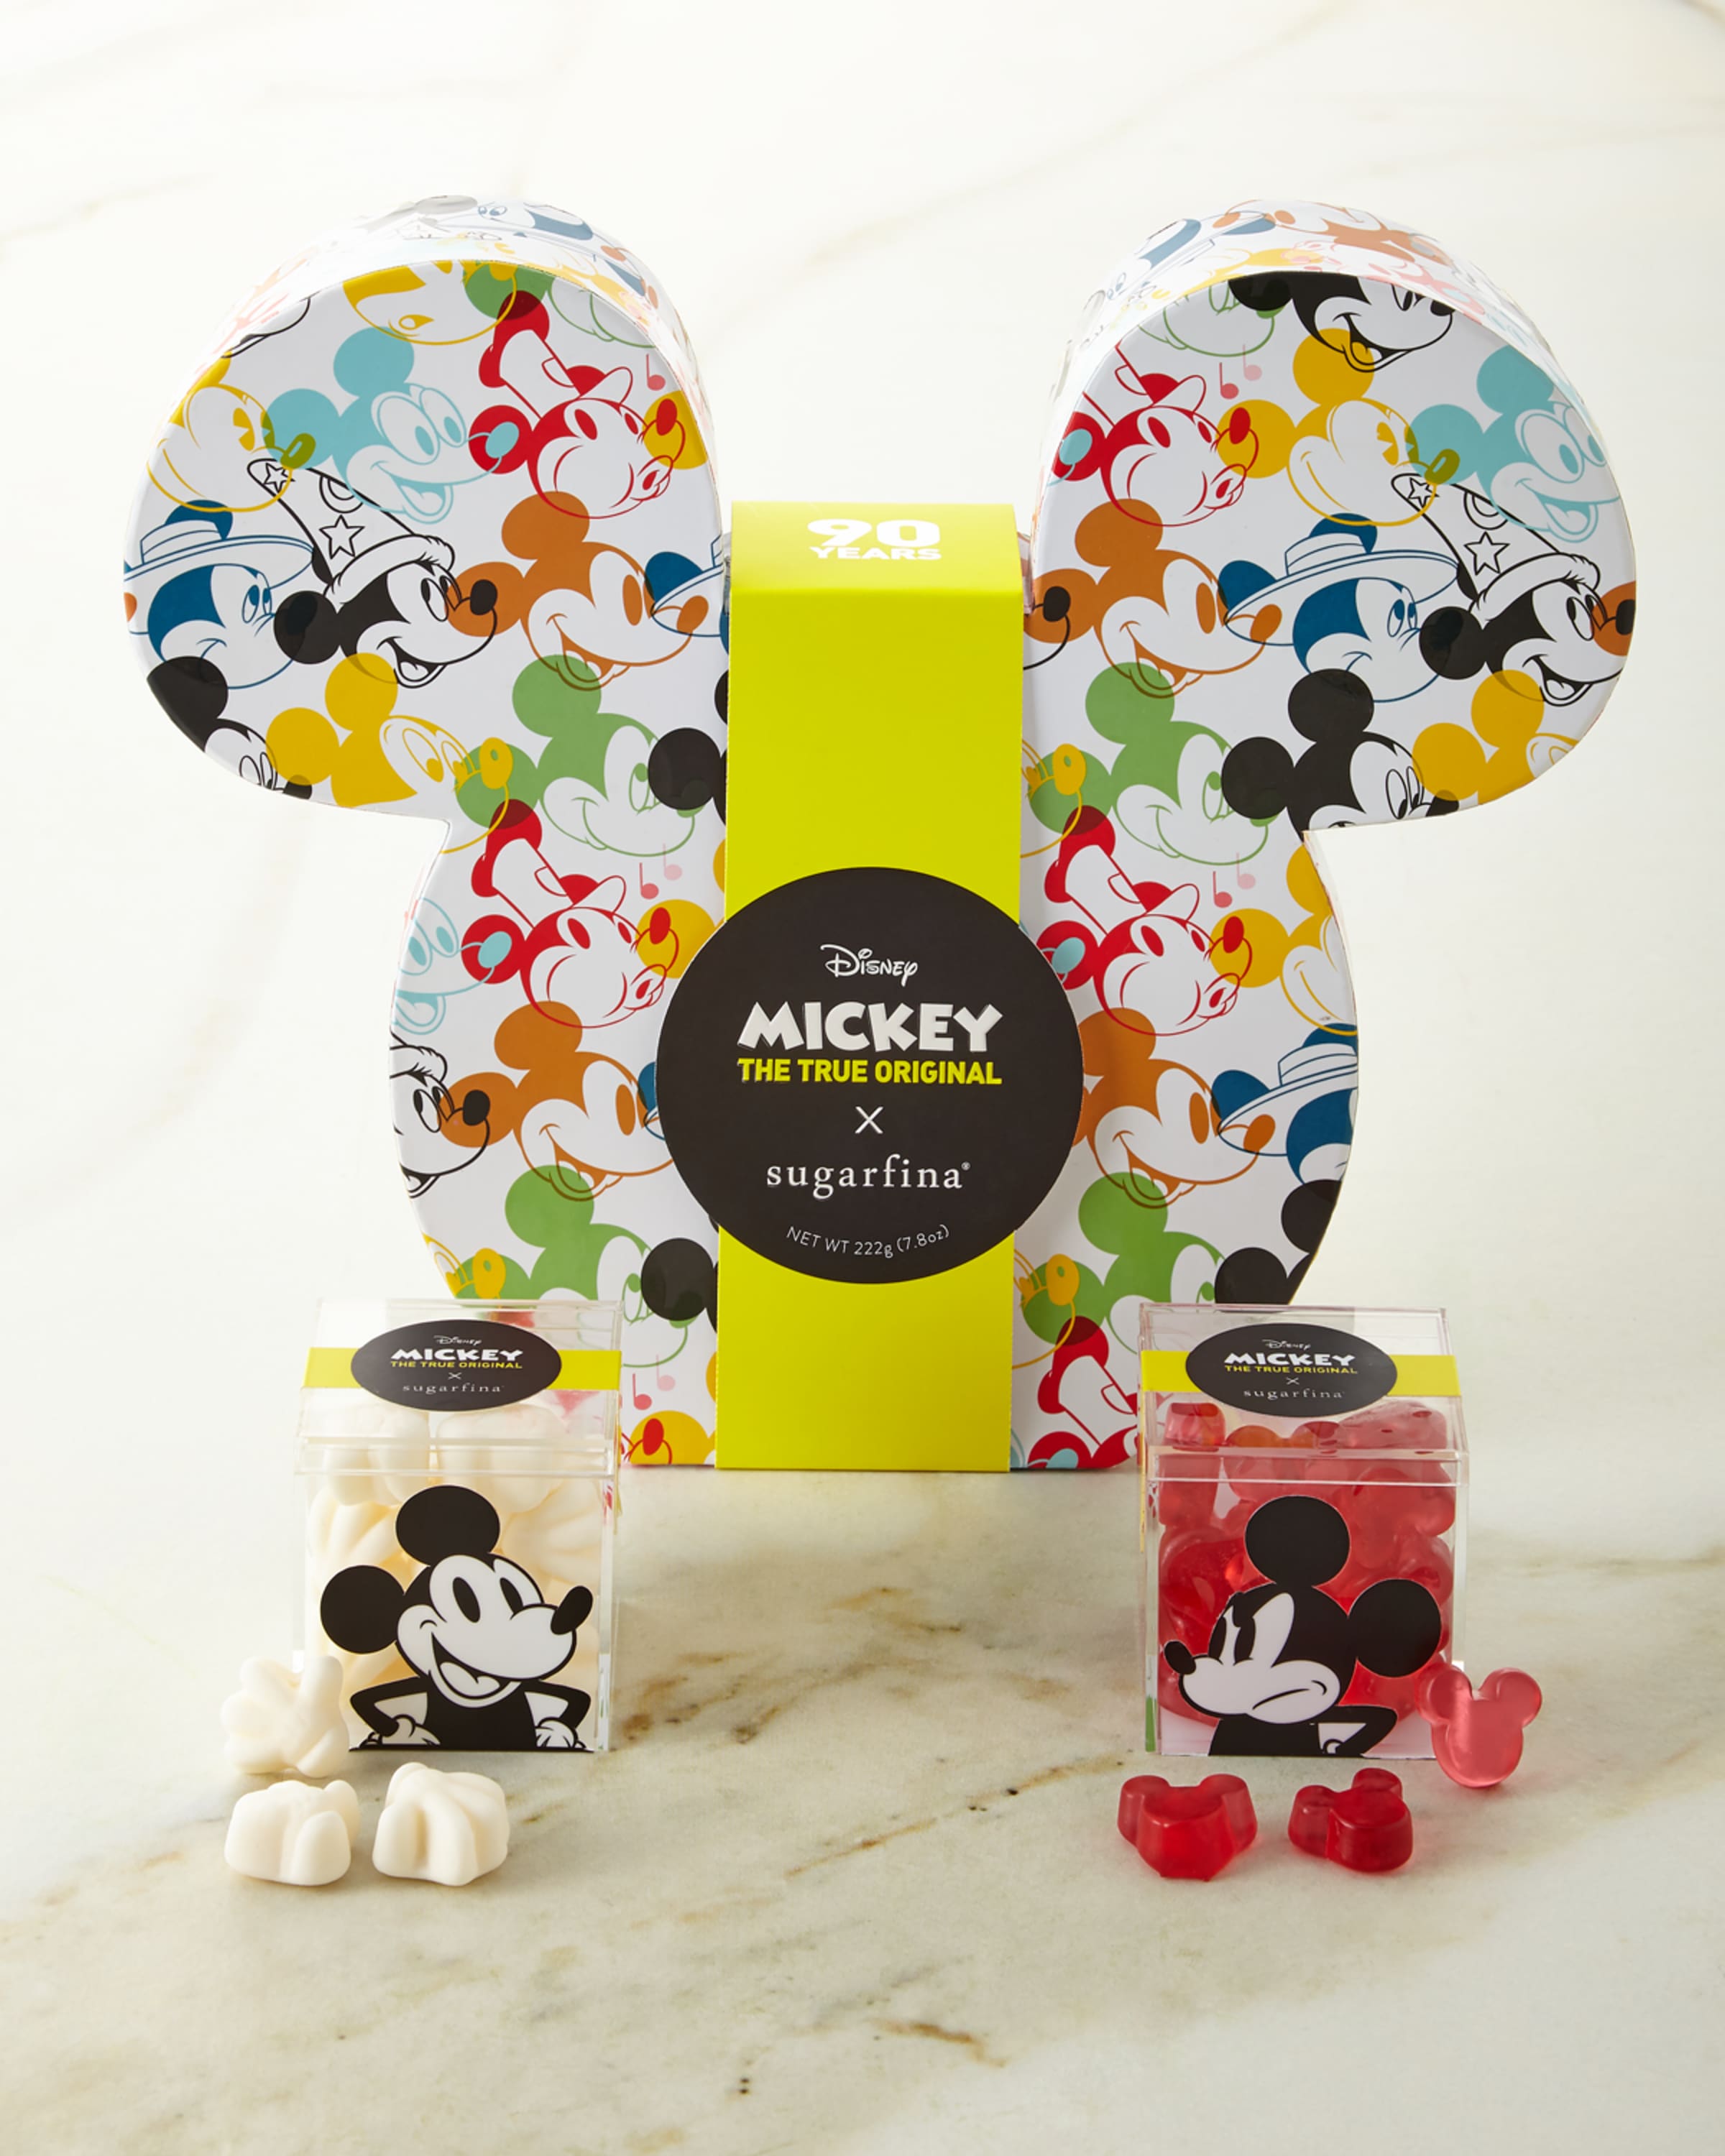 Sugarfina Disney Mickey Mouse Ears 2-Piece Candy Bento Box